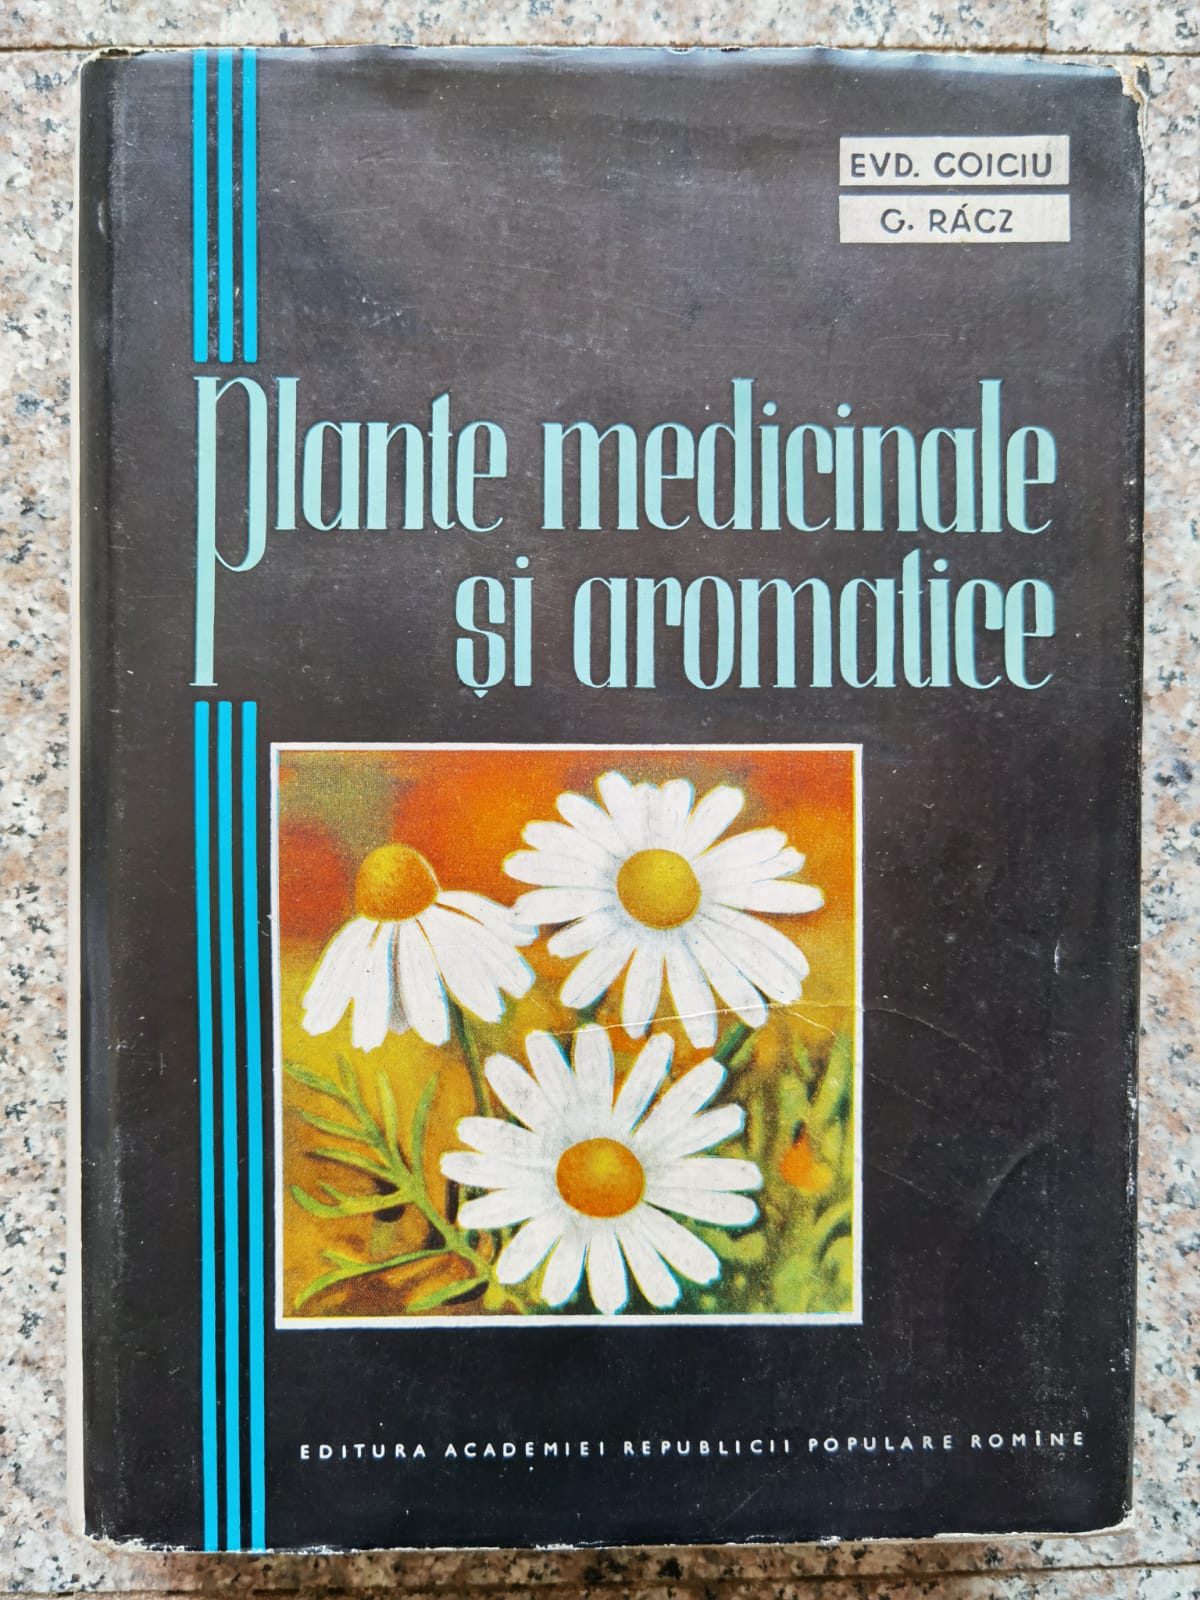 plante medicinale si aromatice                                                                       edv. coiciu, g. racz                                                                                